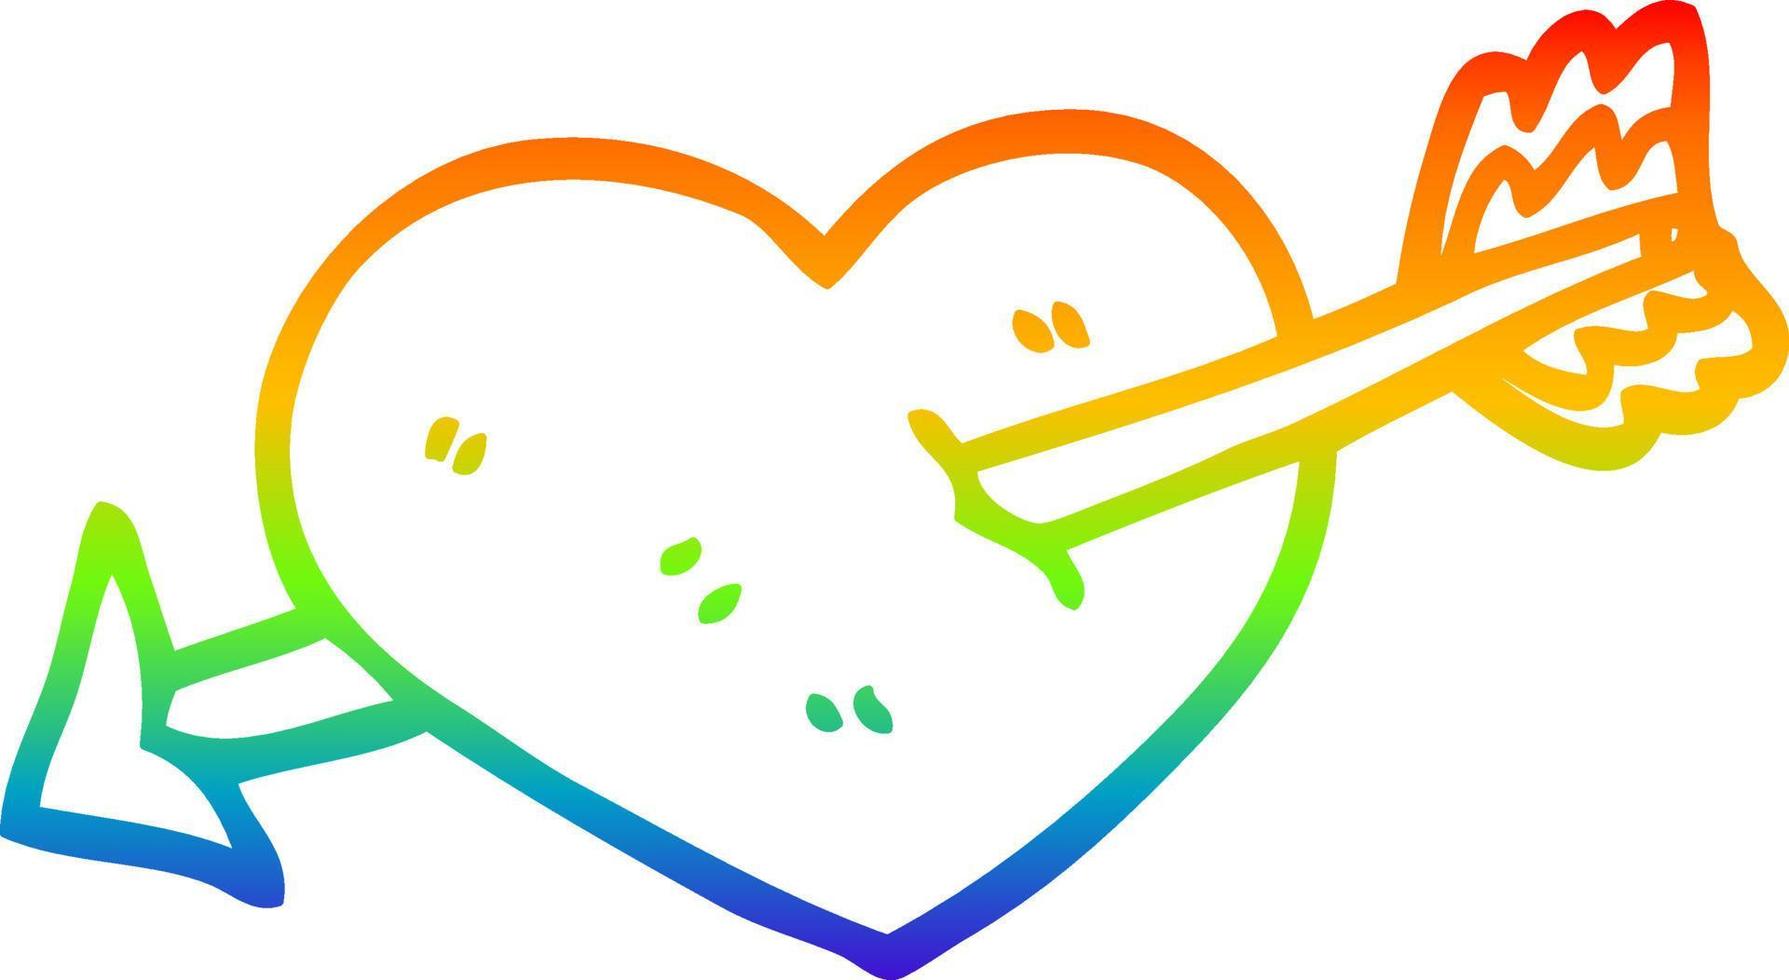 arco iris gradiente línea dibujo dibujos animados corazón disparado con flecha vector